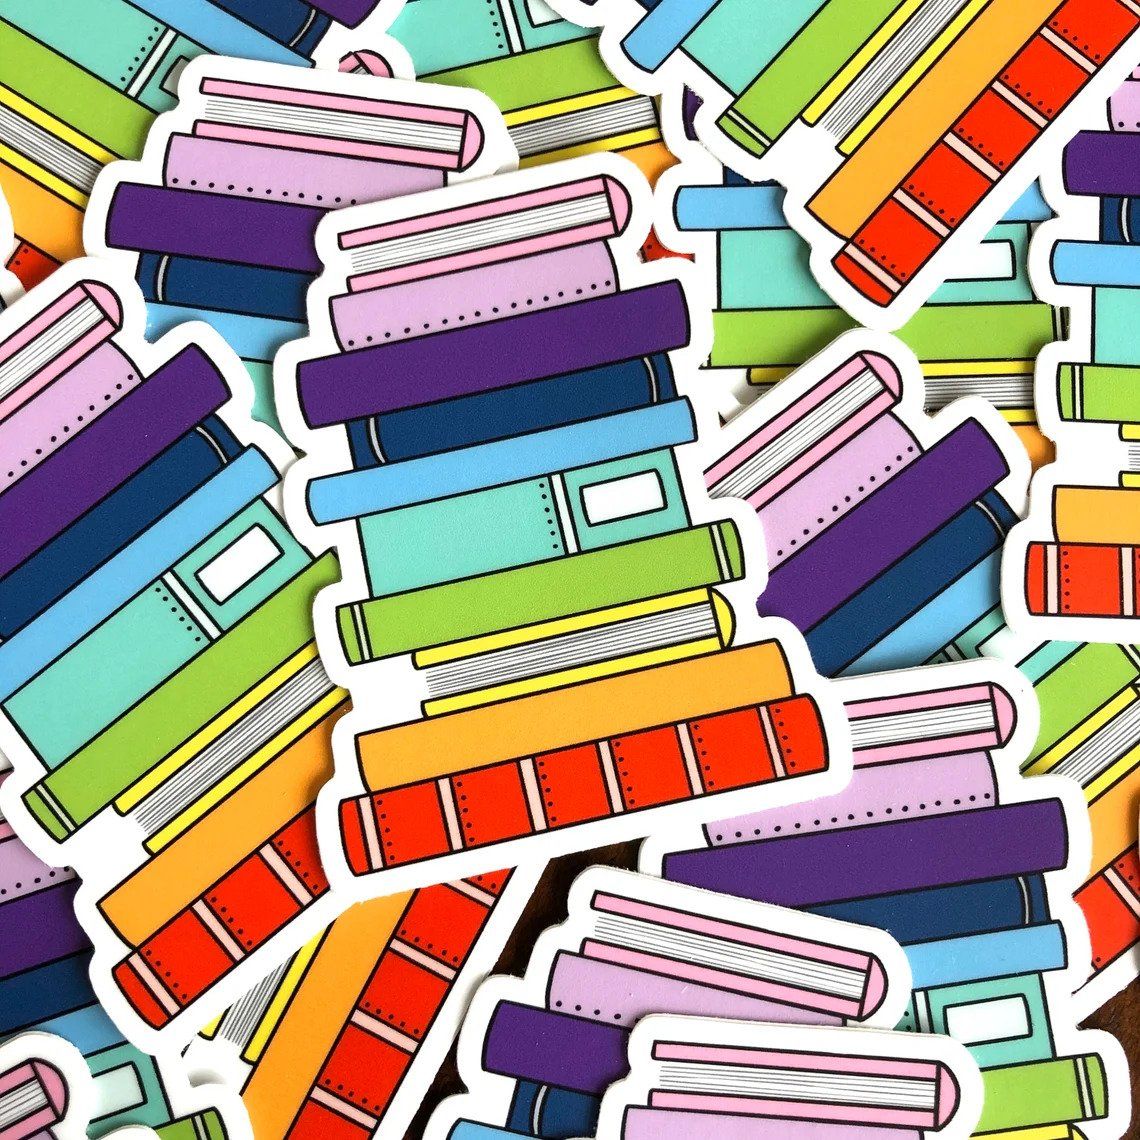 rainbow book stack